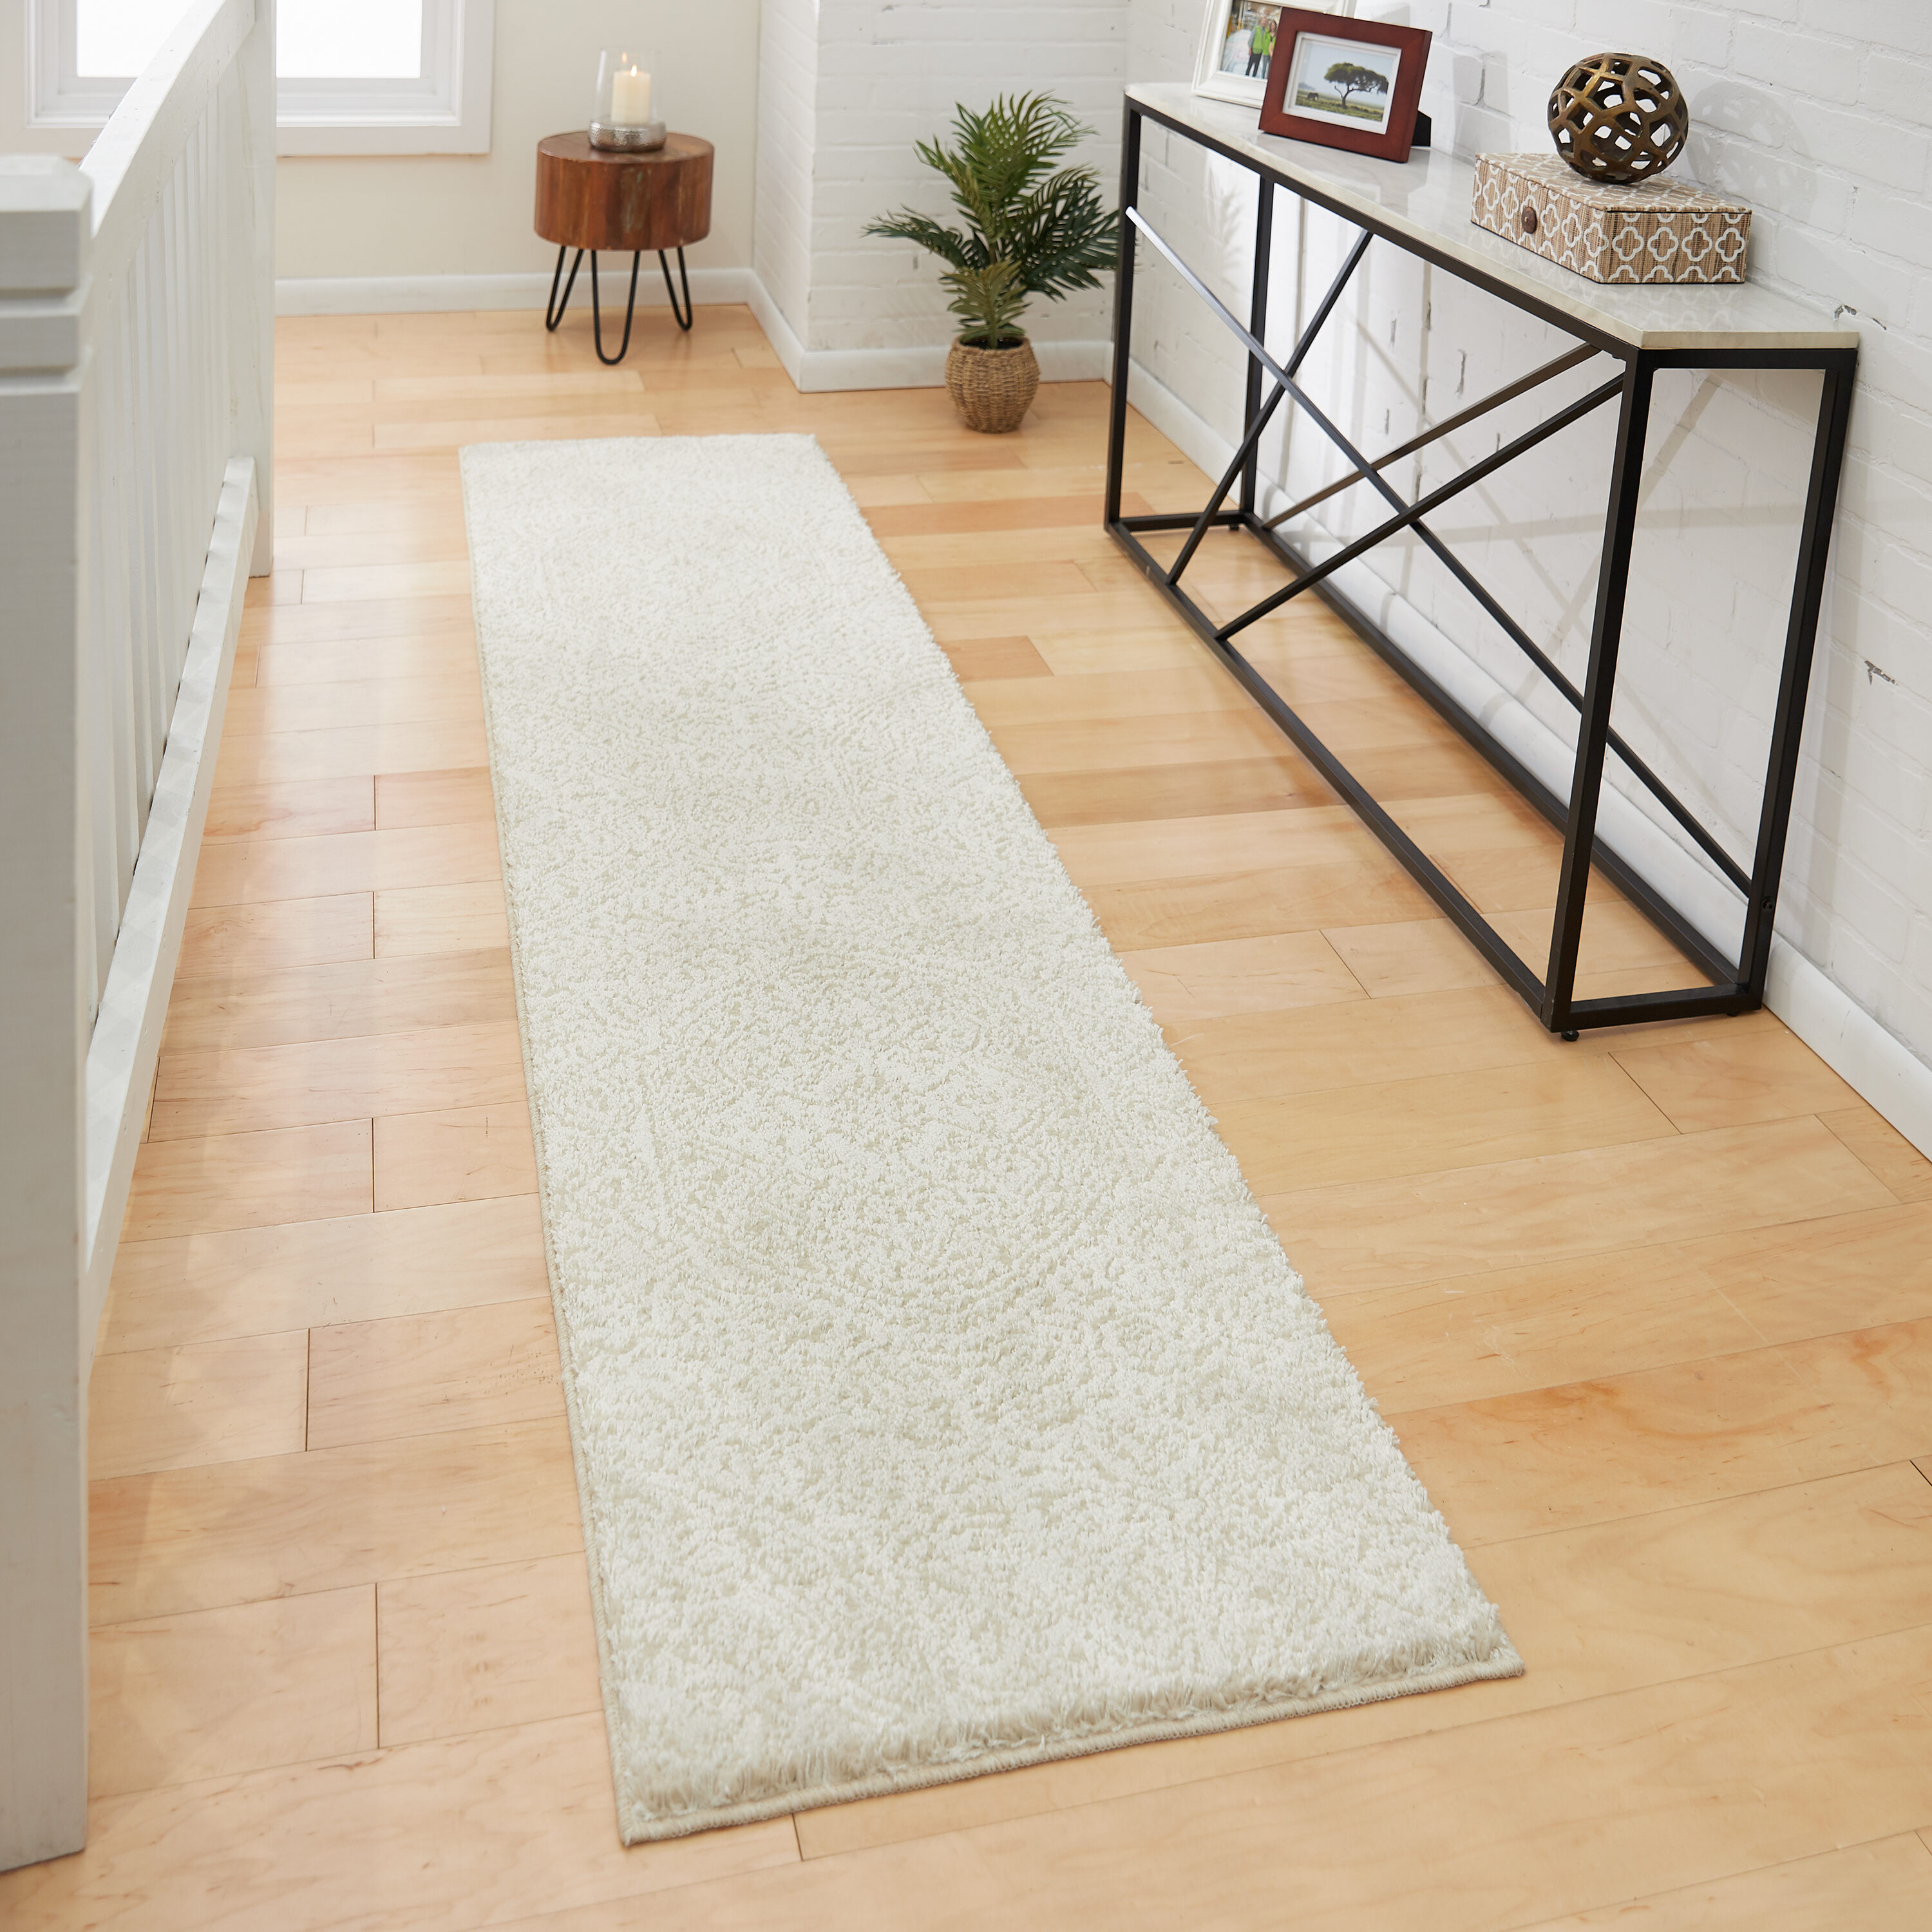 LAMINET Non-Slip Carpet & Floor Protector - Beige - 20' L x 30 W